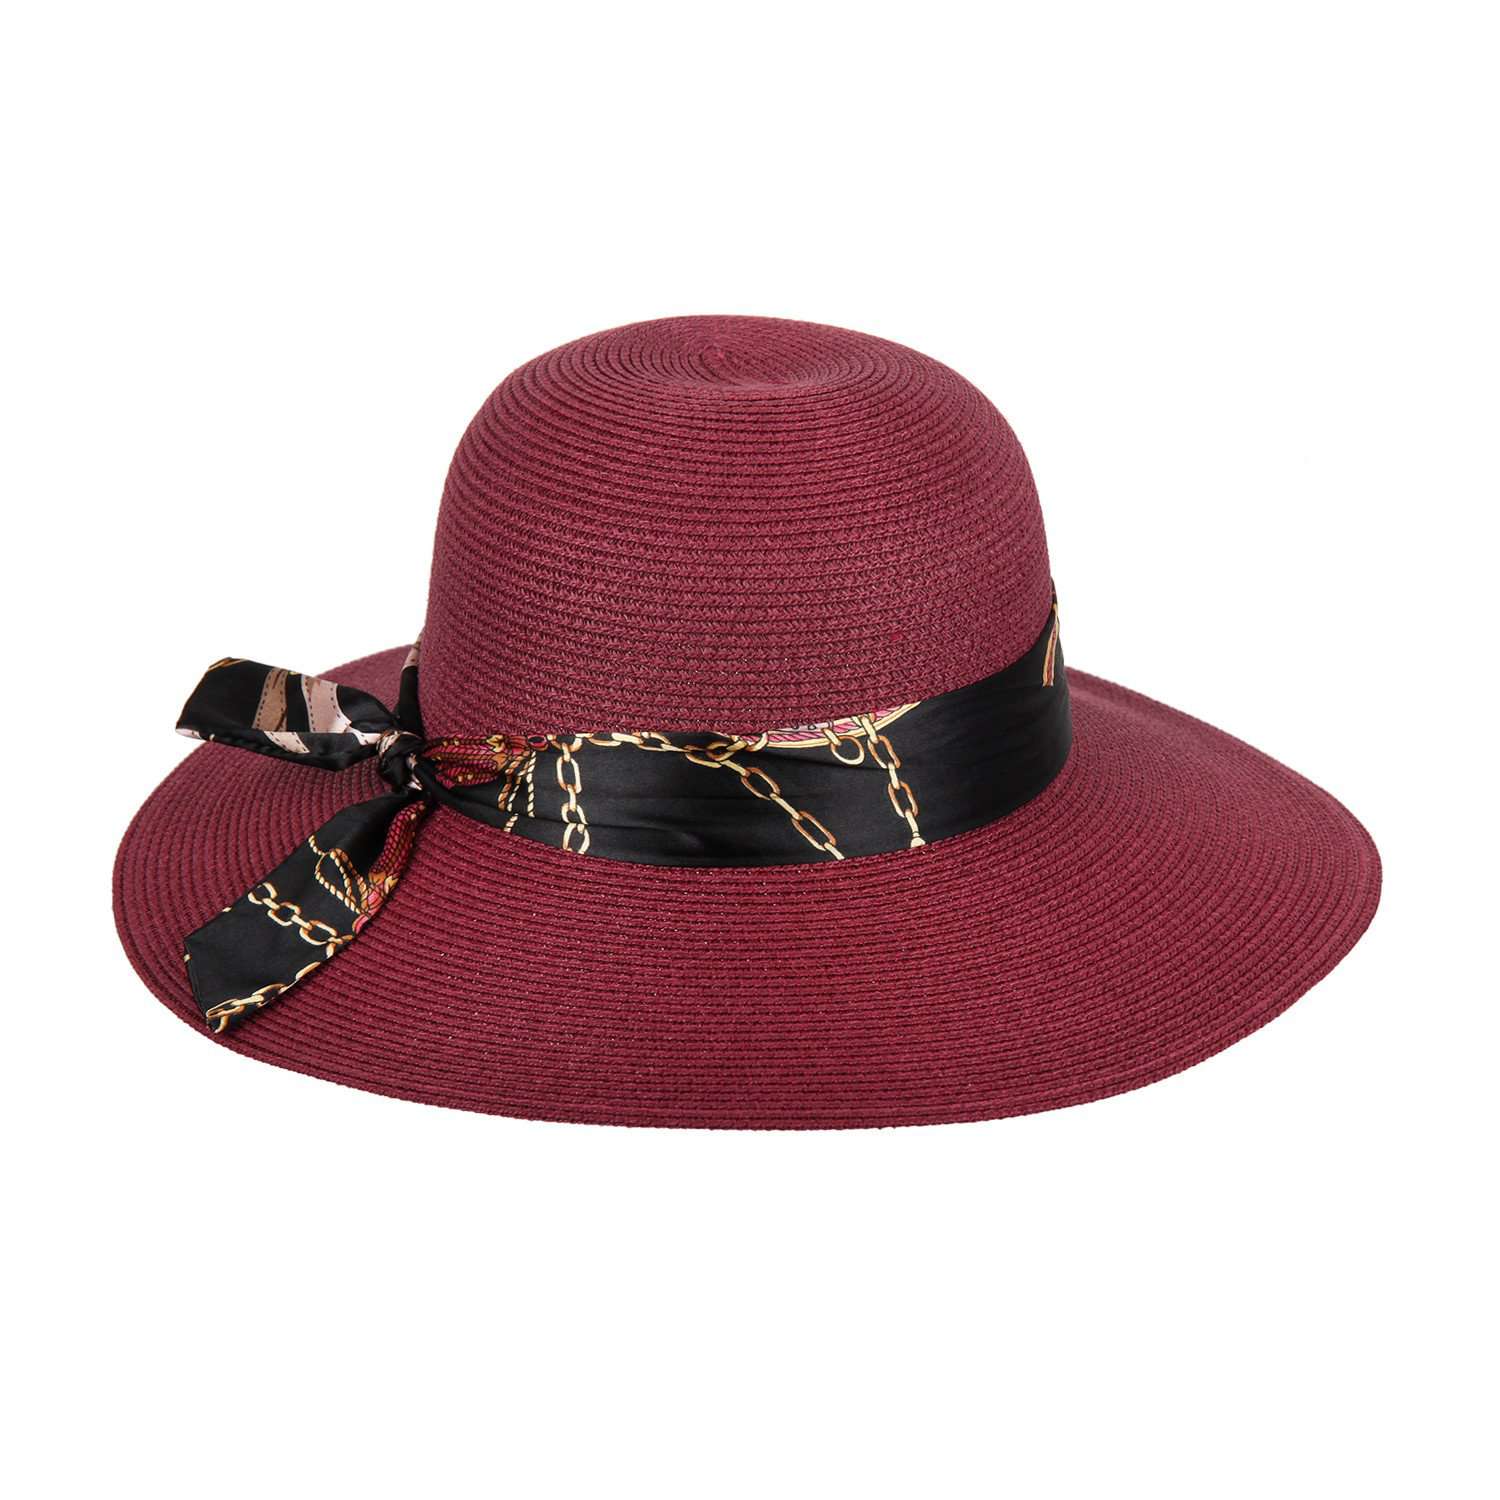 Summer Floppy Hat with Satin Tie, Floppy Hat - SetarTrading Hats 